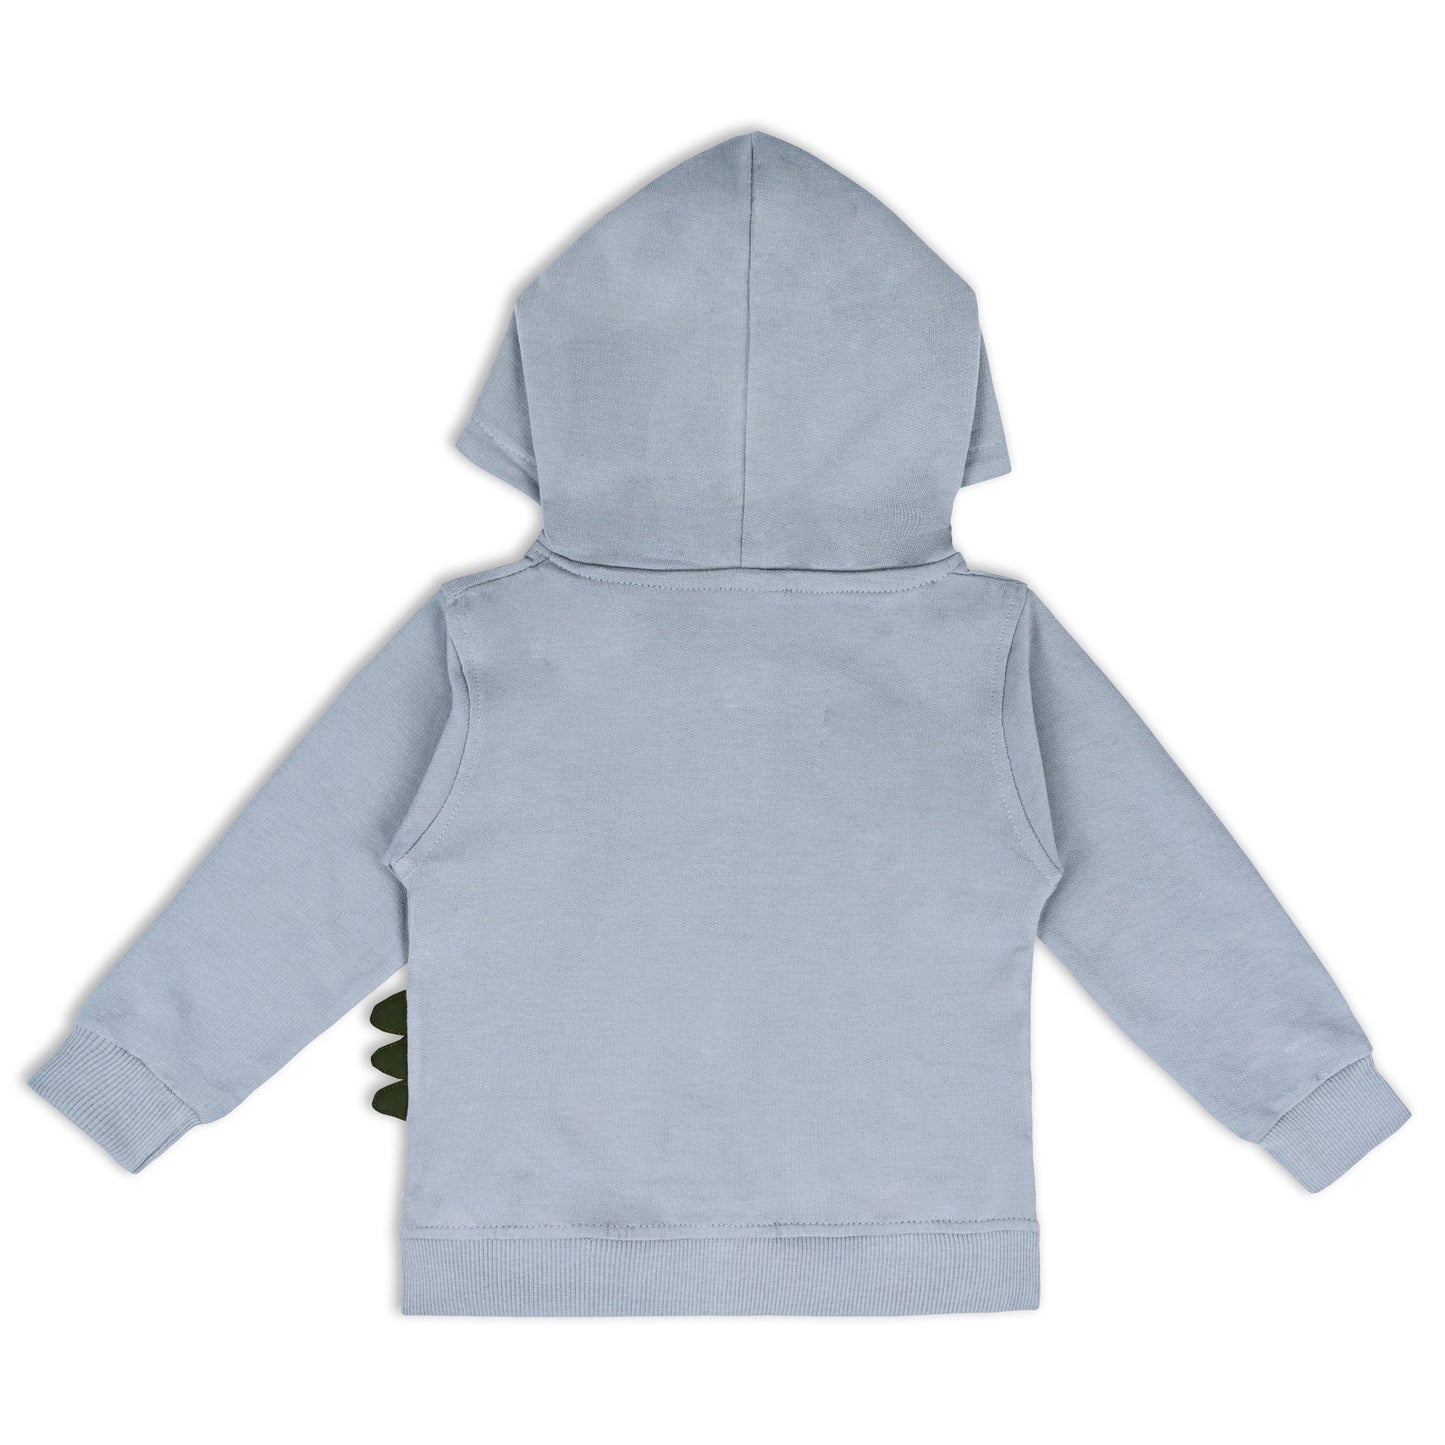 Wishkaro Unisex Cotton Applique Full Sleeve Hooded Sweatshirt-T306gry